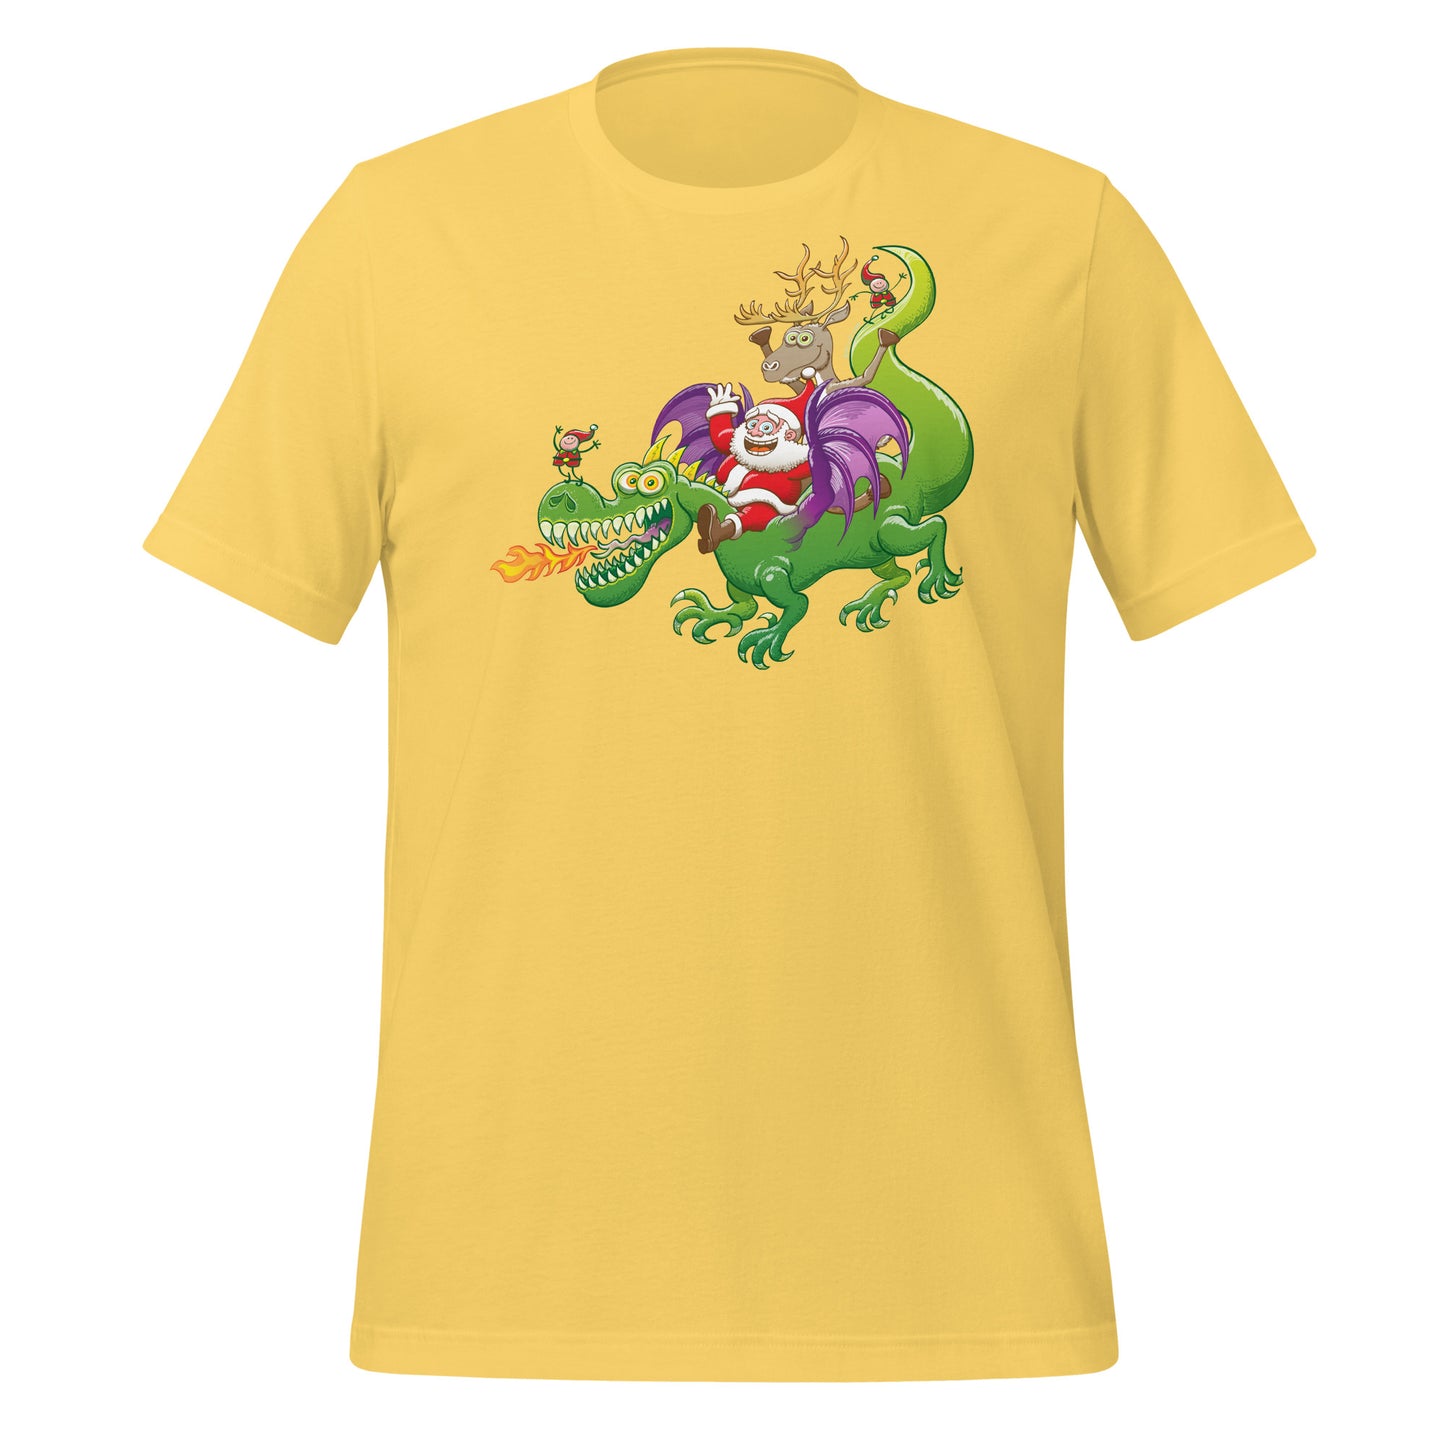 Santa's Dragon-Powered Celebration: Innovative Christmas Adventure - Unisex t-shirt. Front view. Yellow color